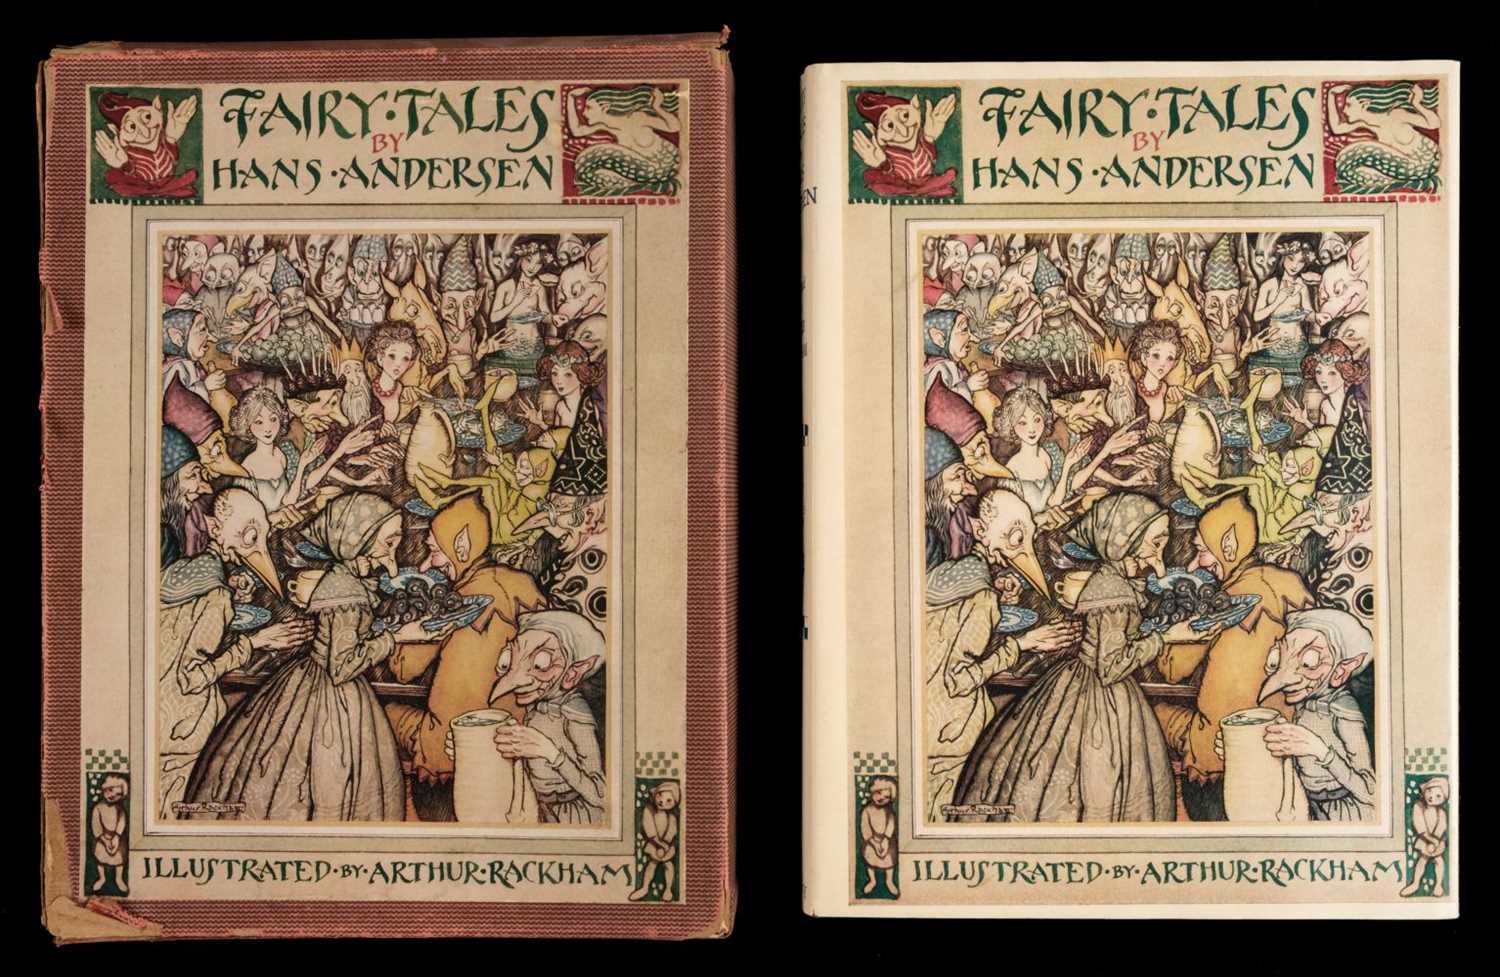 Lot 717 - Rackham (Arthur, illustrator). Fairy Tales, by Hans Andersen, Philadelphia, 1932